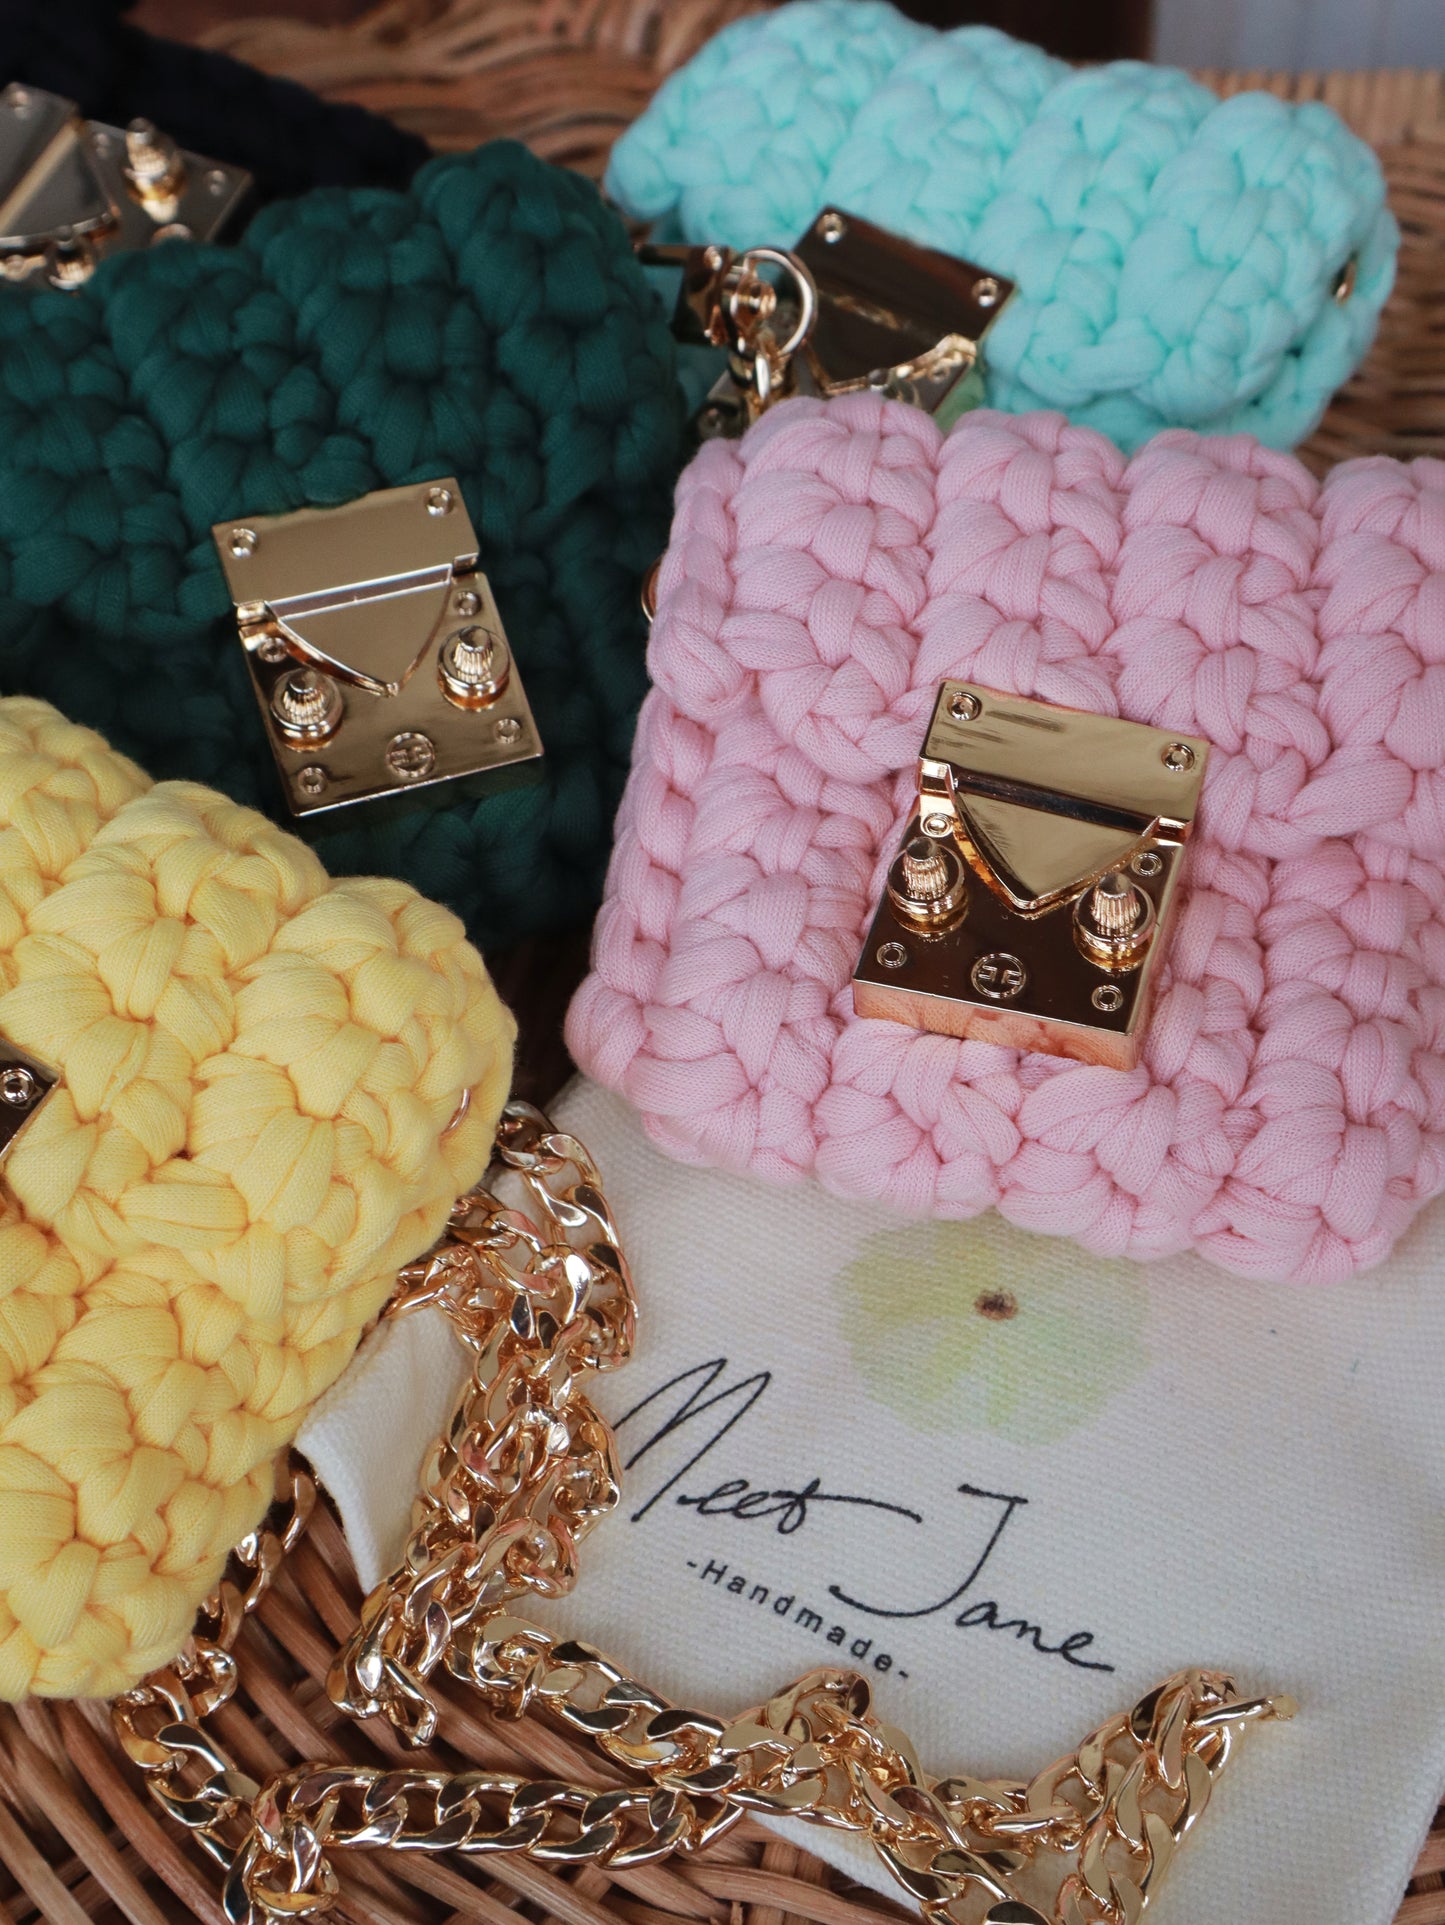 Crochet Accessories| Melbourne |cotton T-shirt yarn cross body bag|6 colours